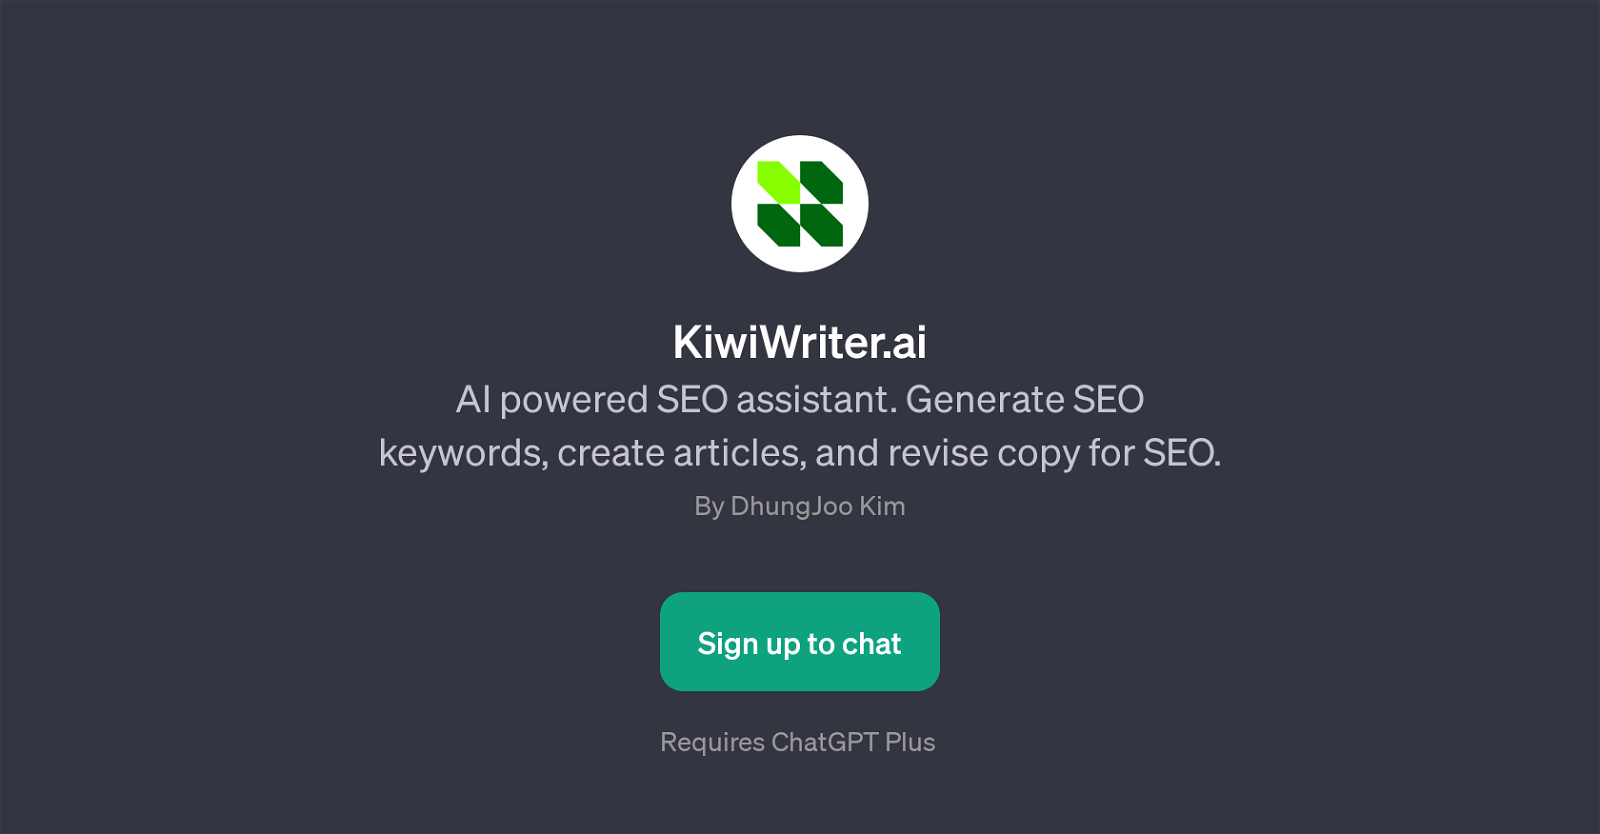 KiwiWriter.ai website